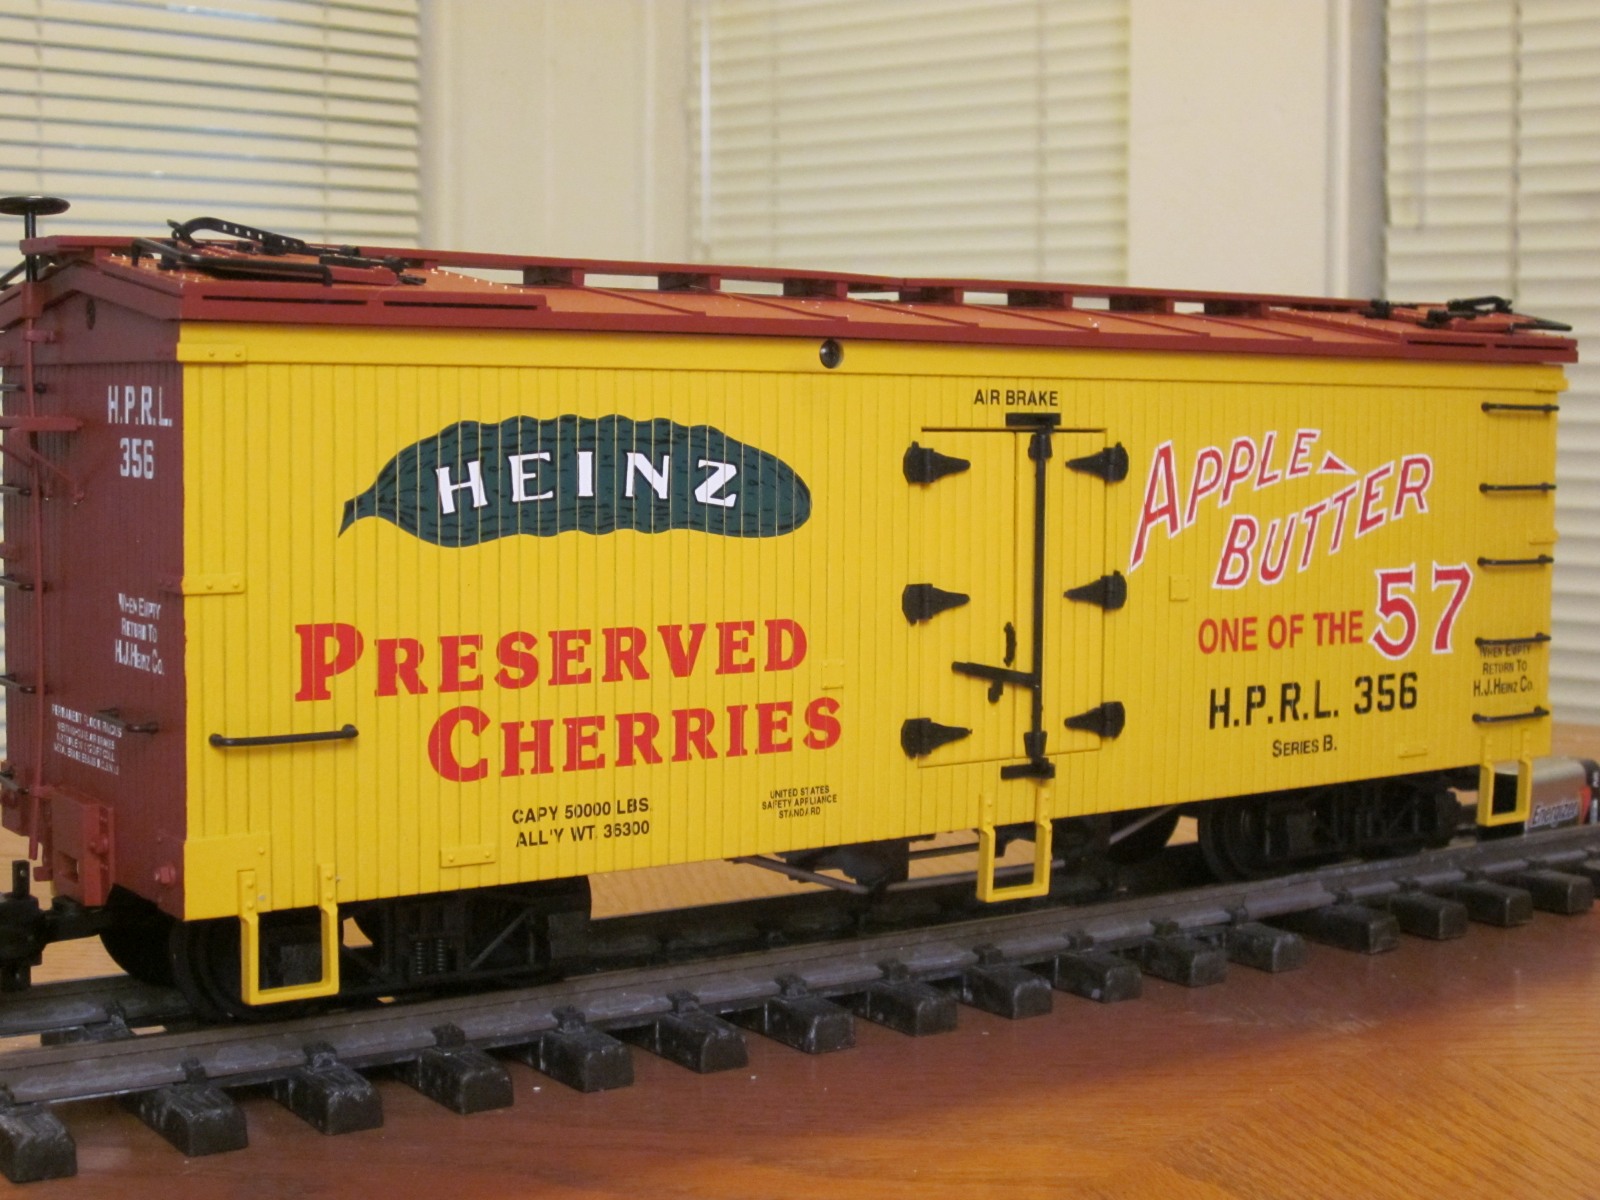 R16002 Heinz Preserved Cherries HPRL 356